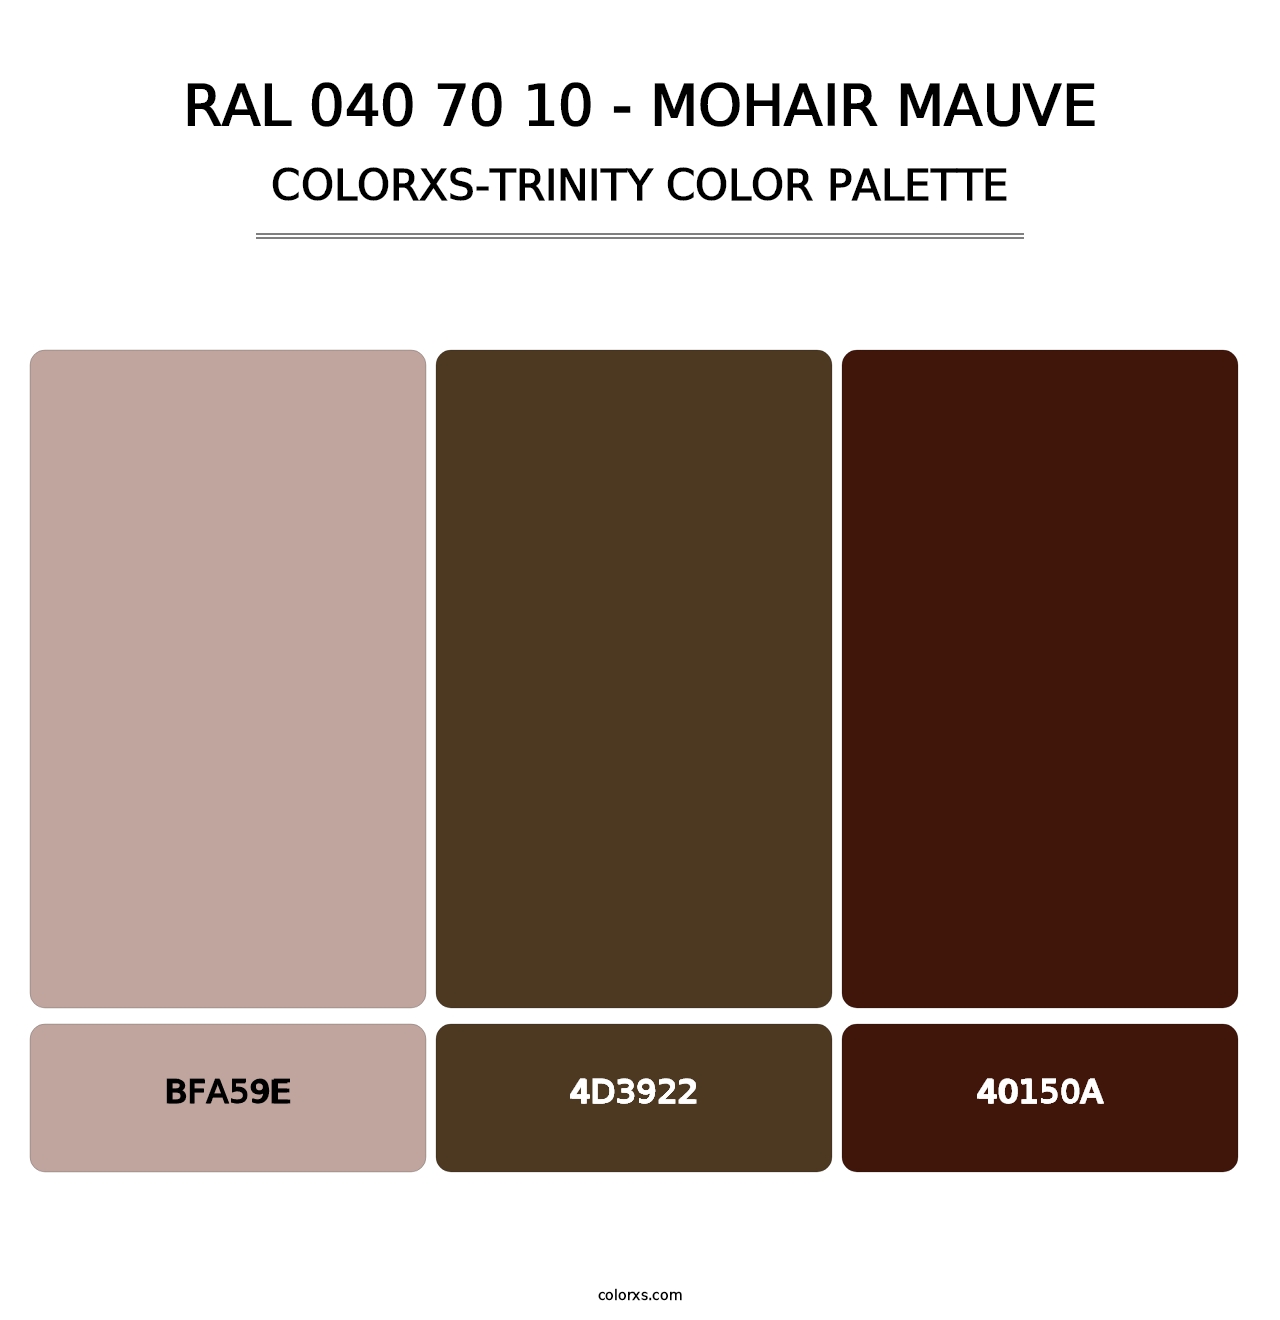 RAL 040 70 10 - Mohair Mauve - Colorxs Trinity Palette